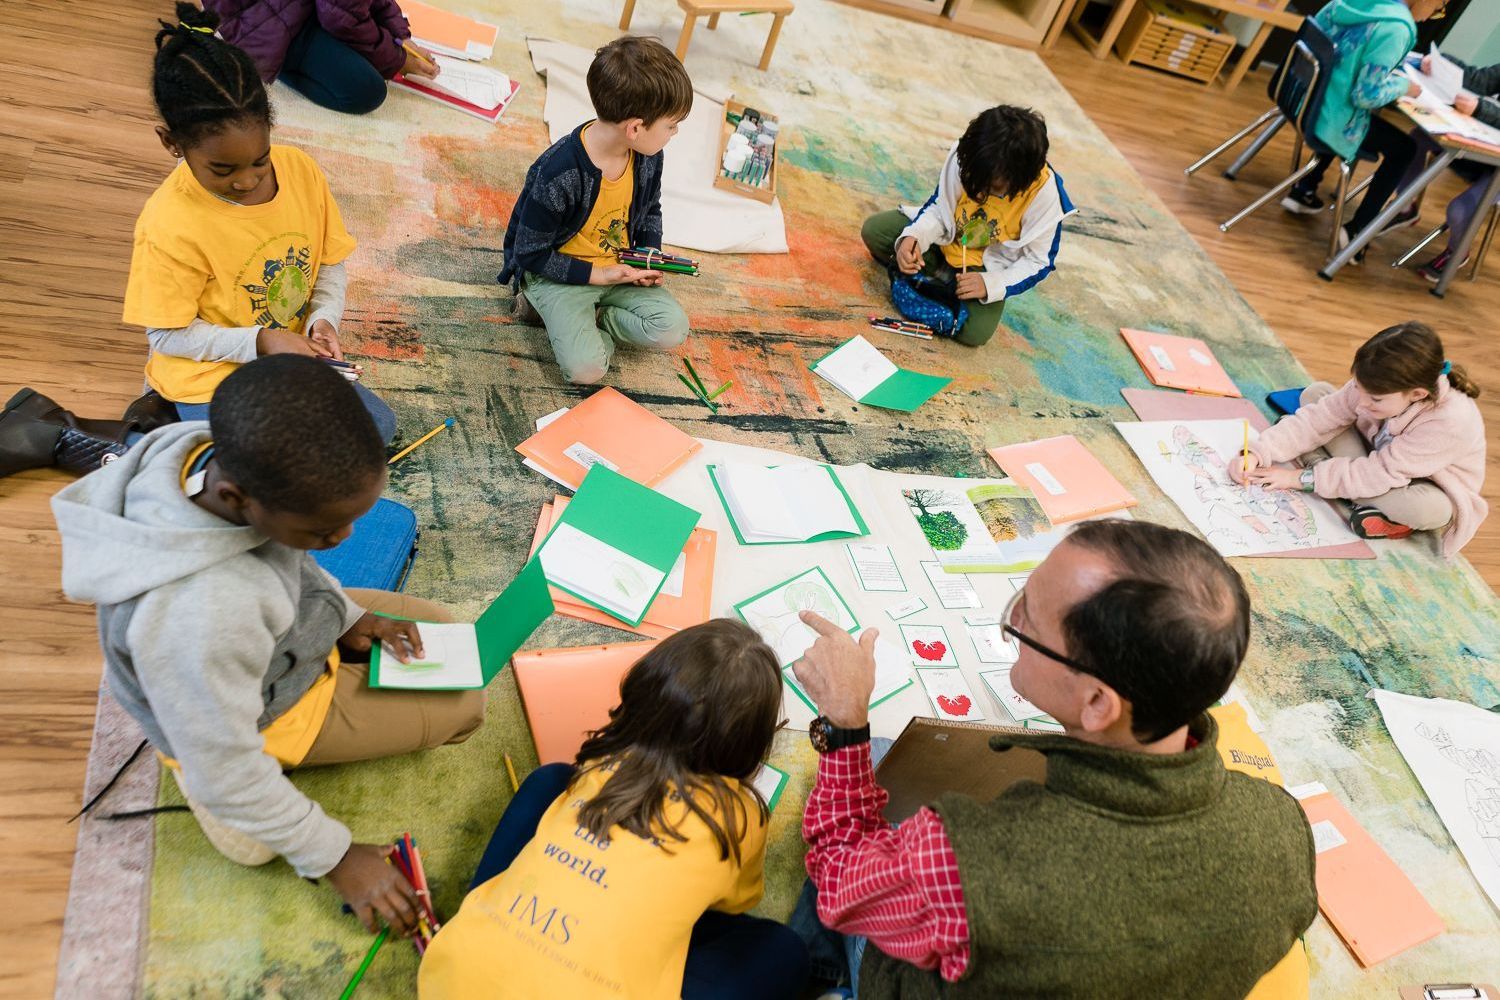 Montessori guide working with children